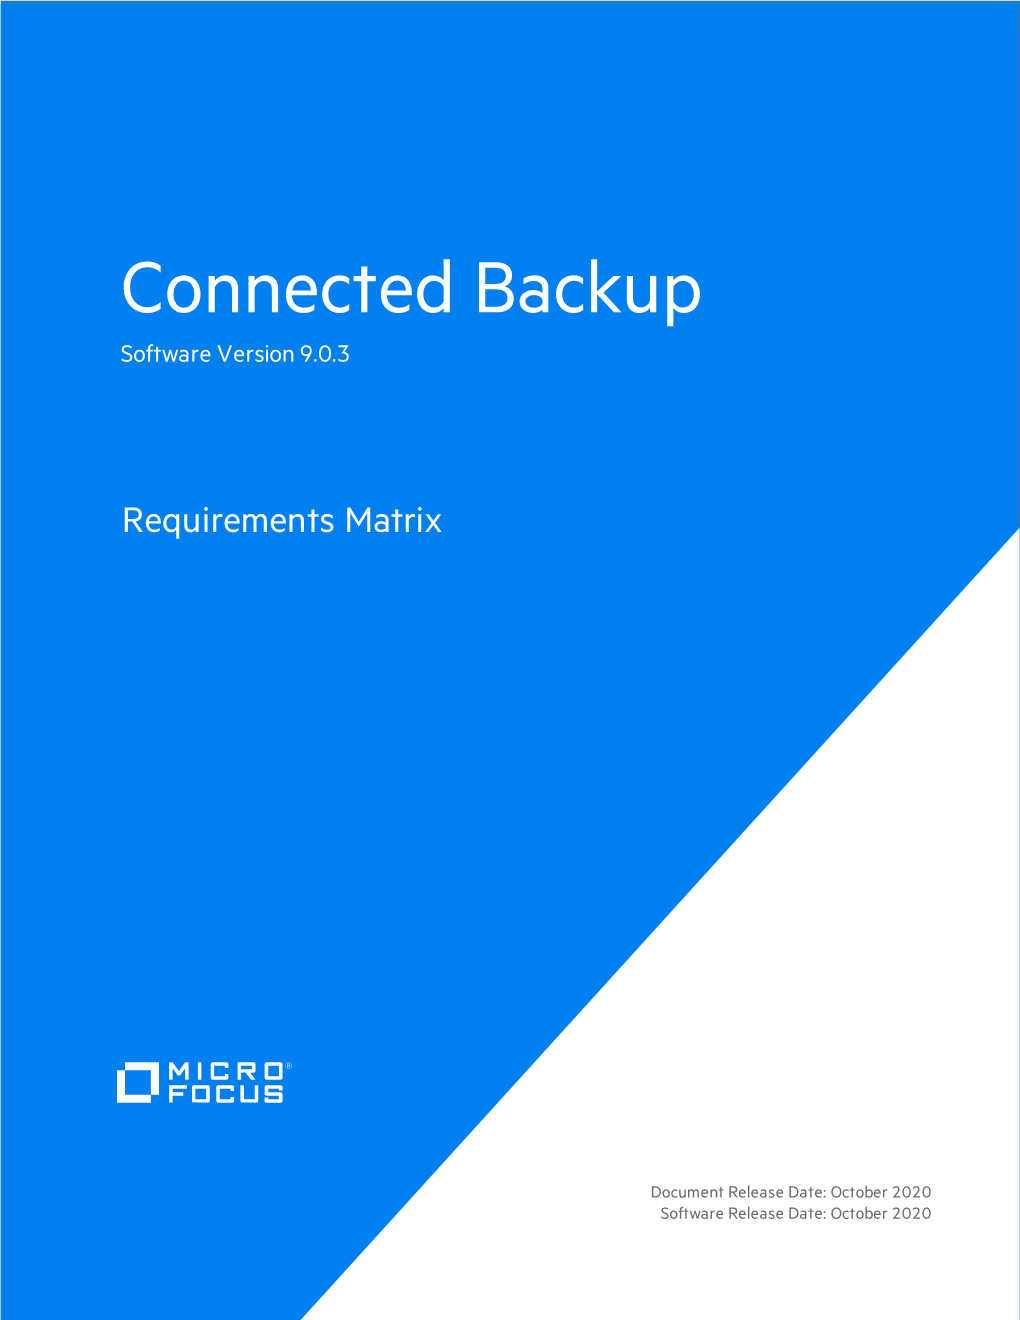 Connected Backup 9.0.3 Requirements Matrix